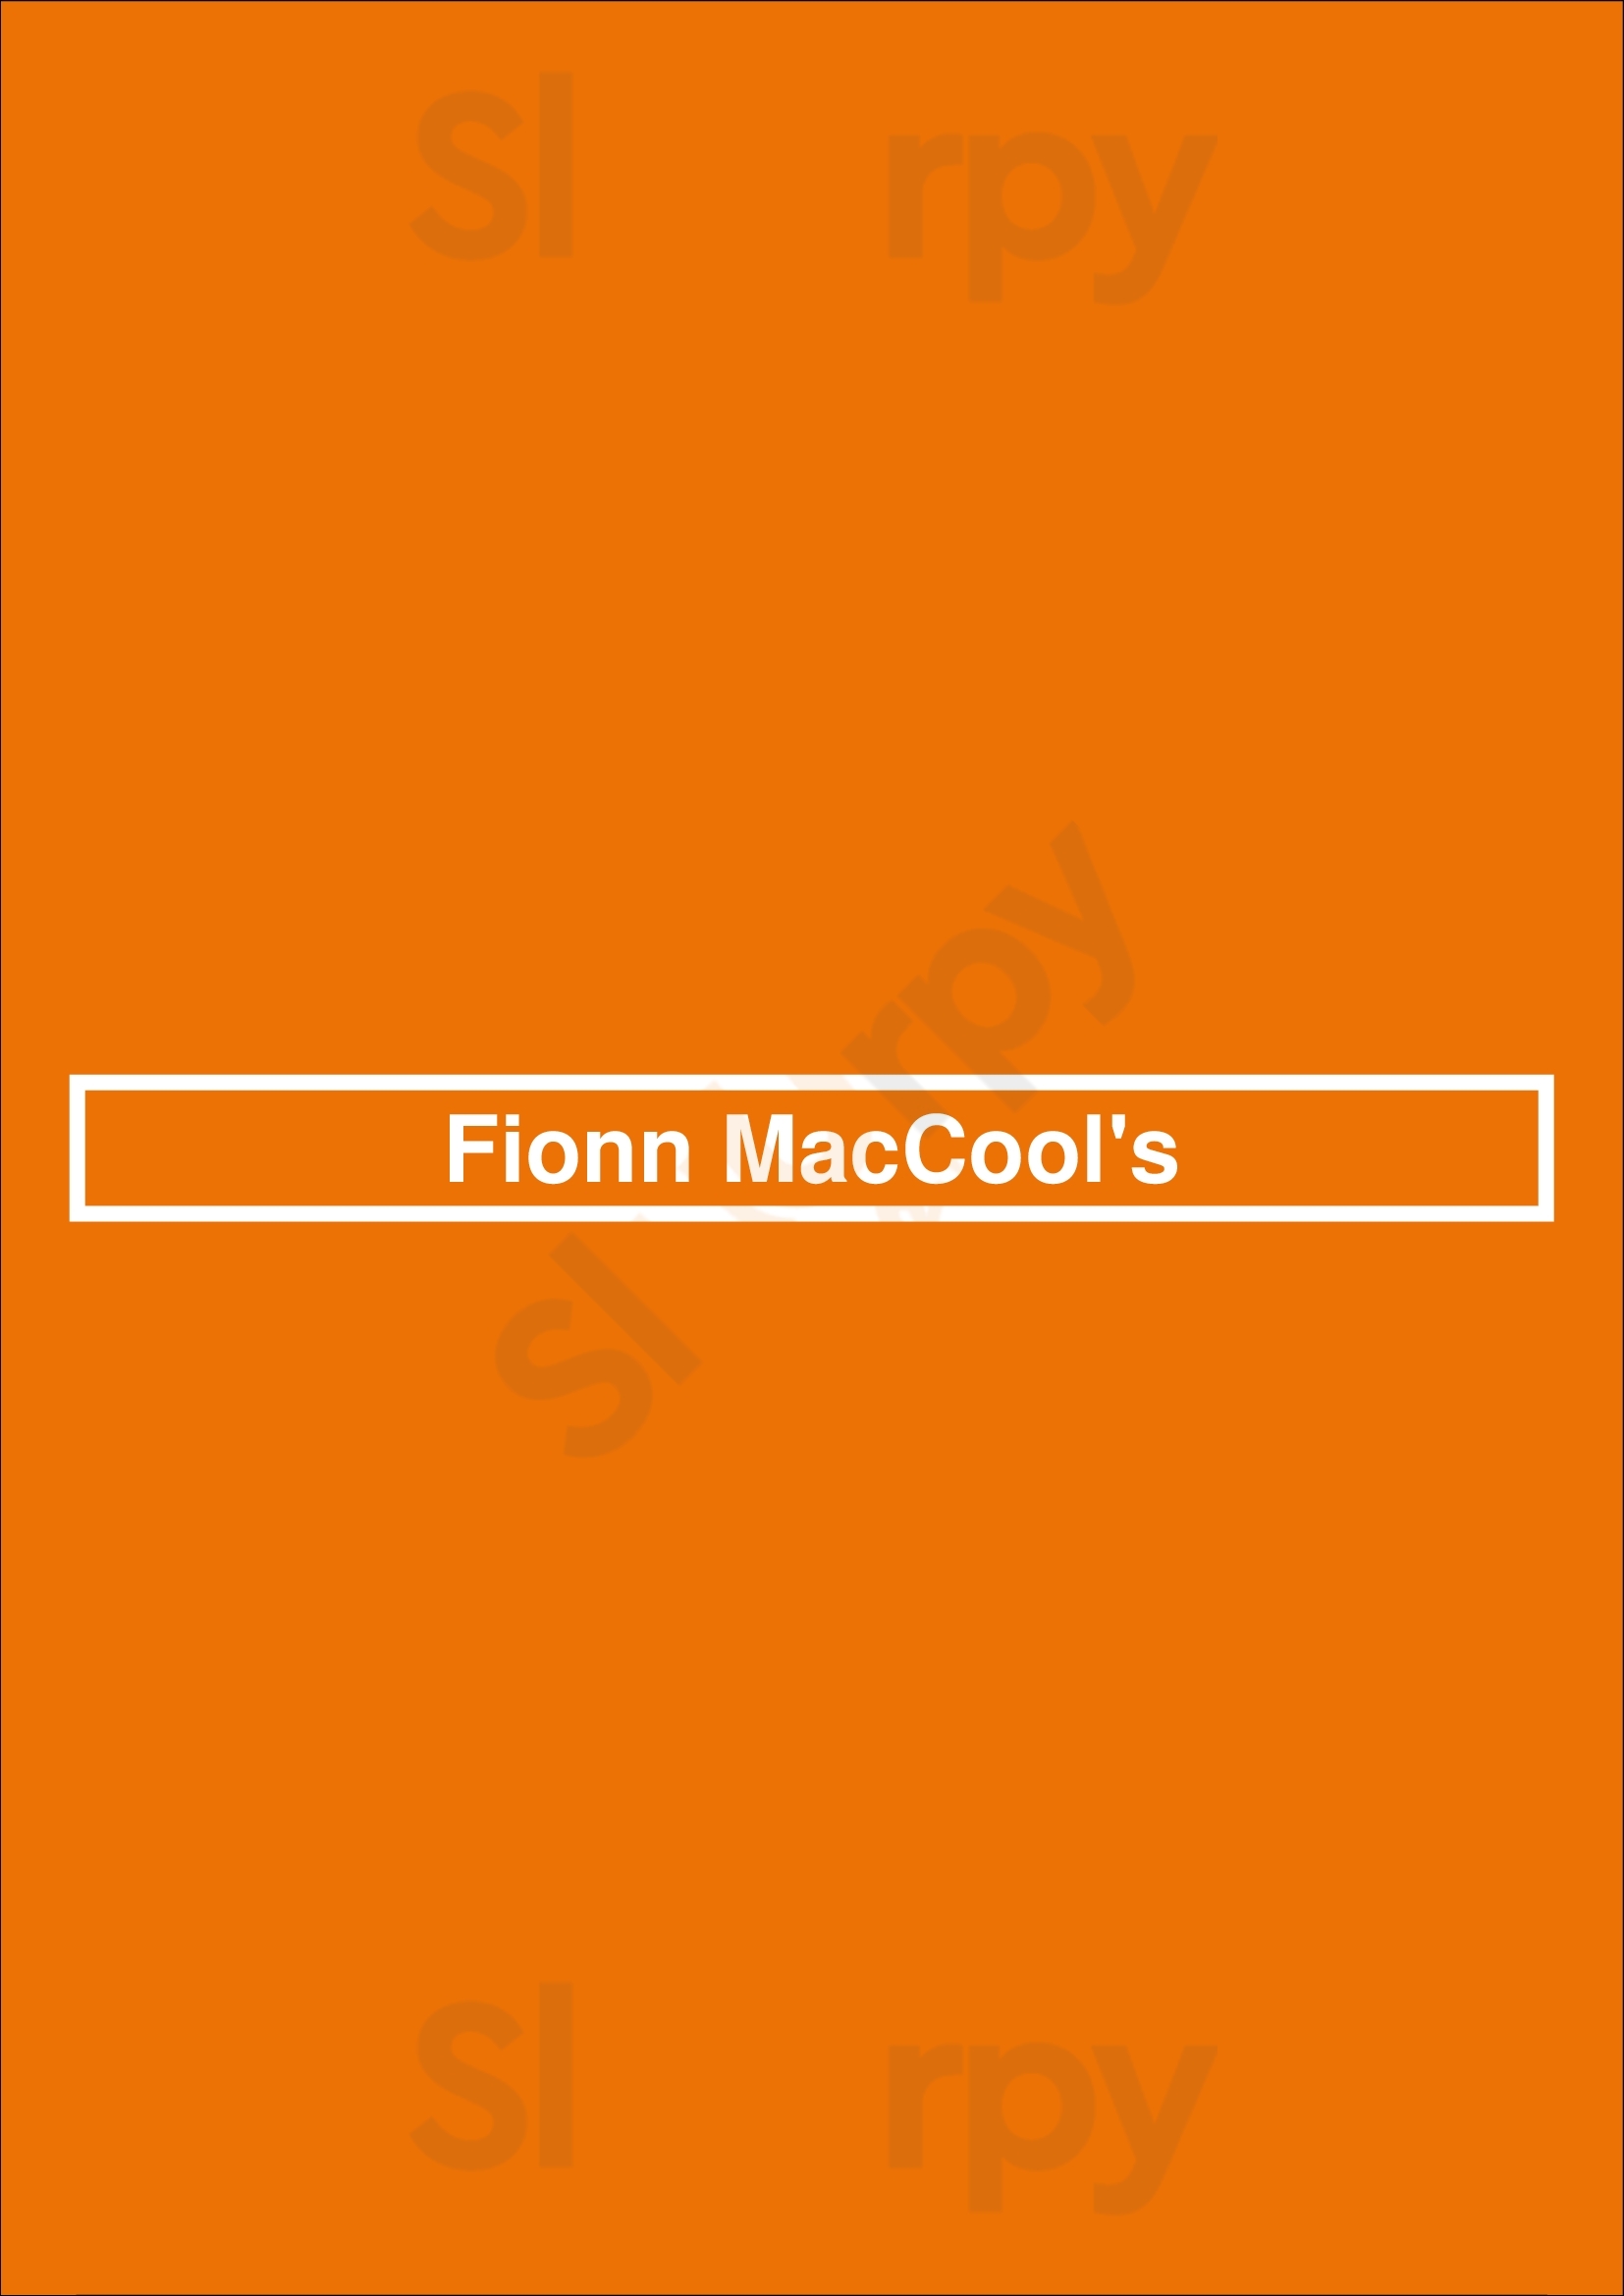 Fionn Maccool's Newmarket Menu - 1